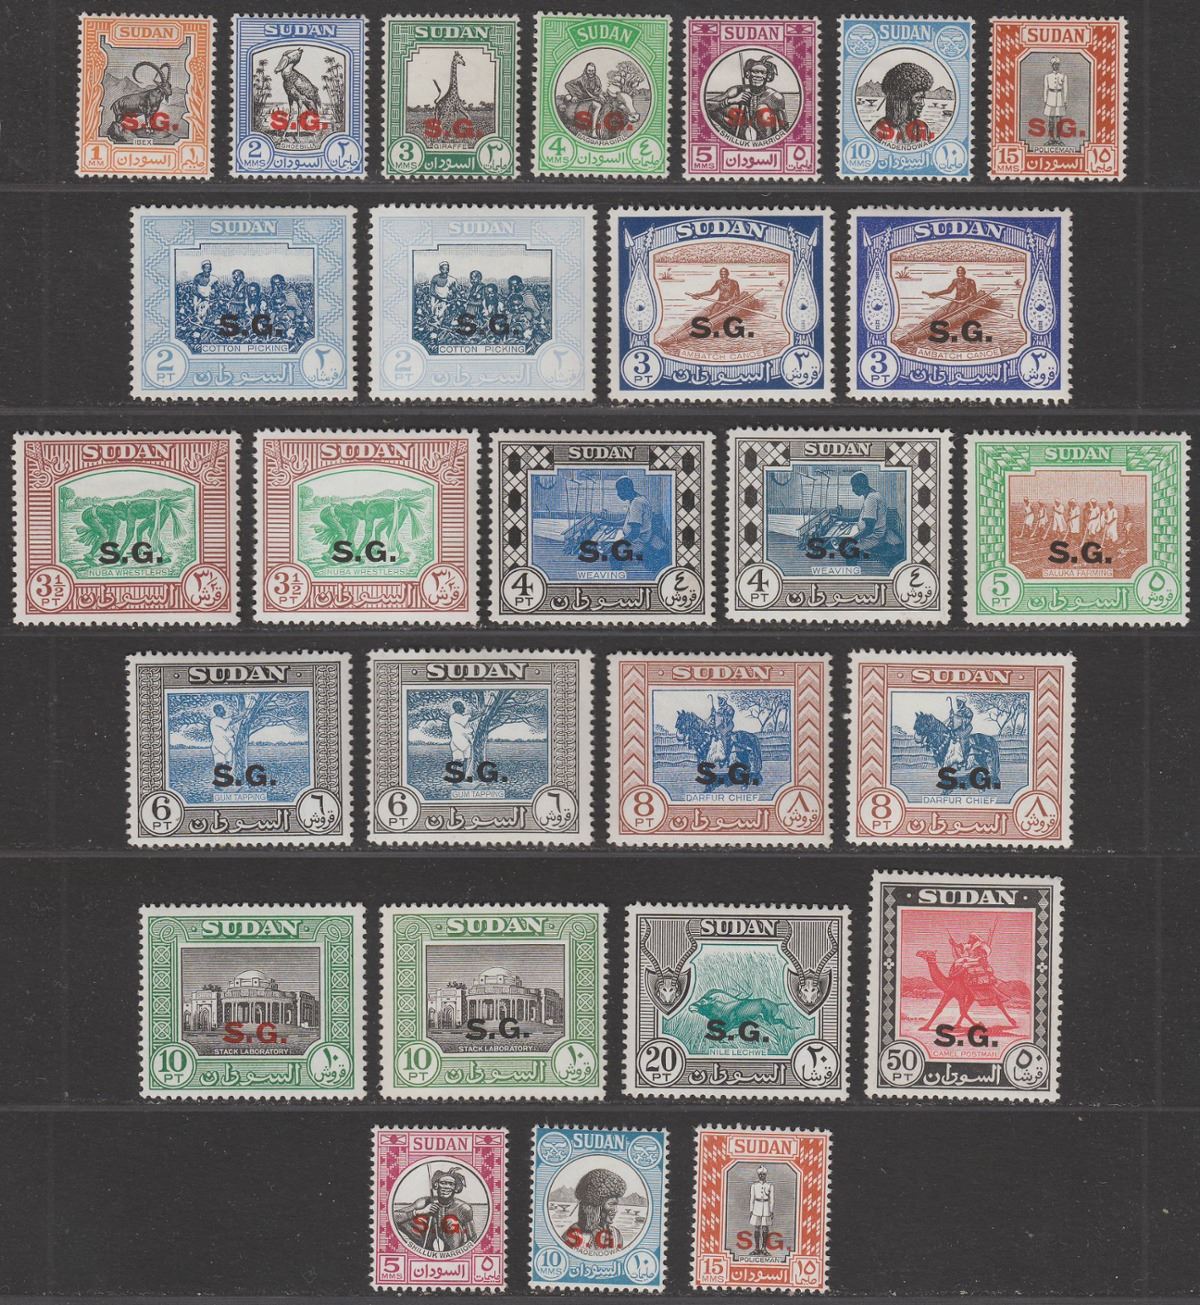 Sudan 1951 KGVI Official SG Overprint Set Mint SG O67-O83 cat £75+ some shades